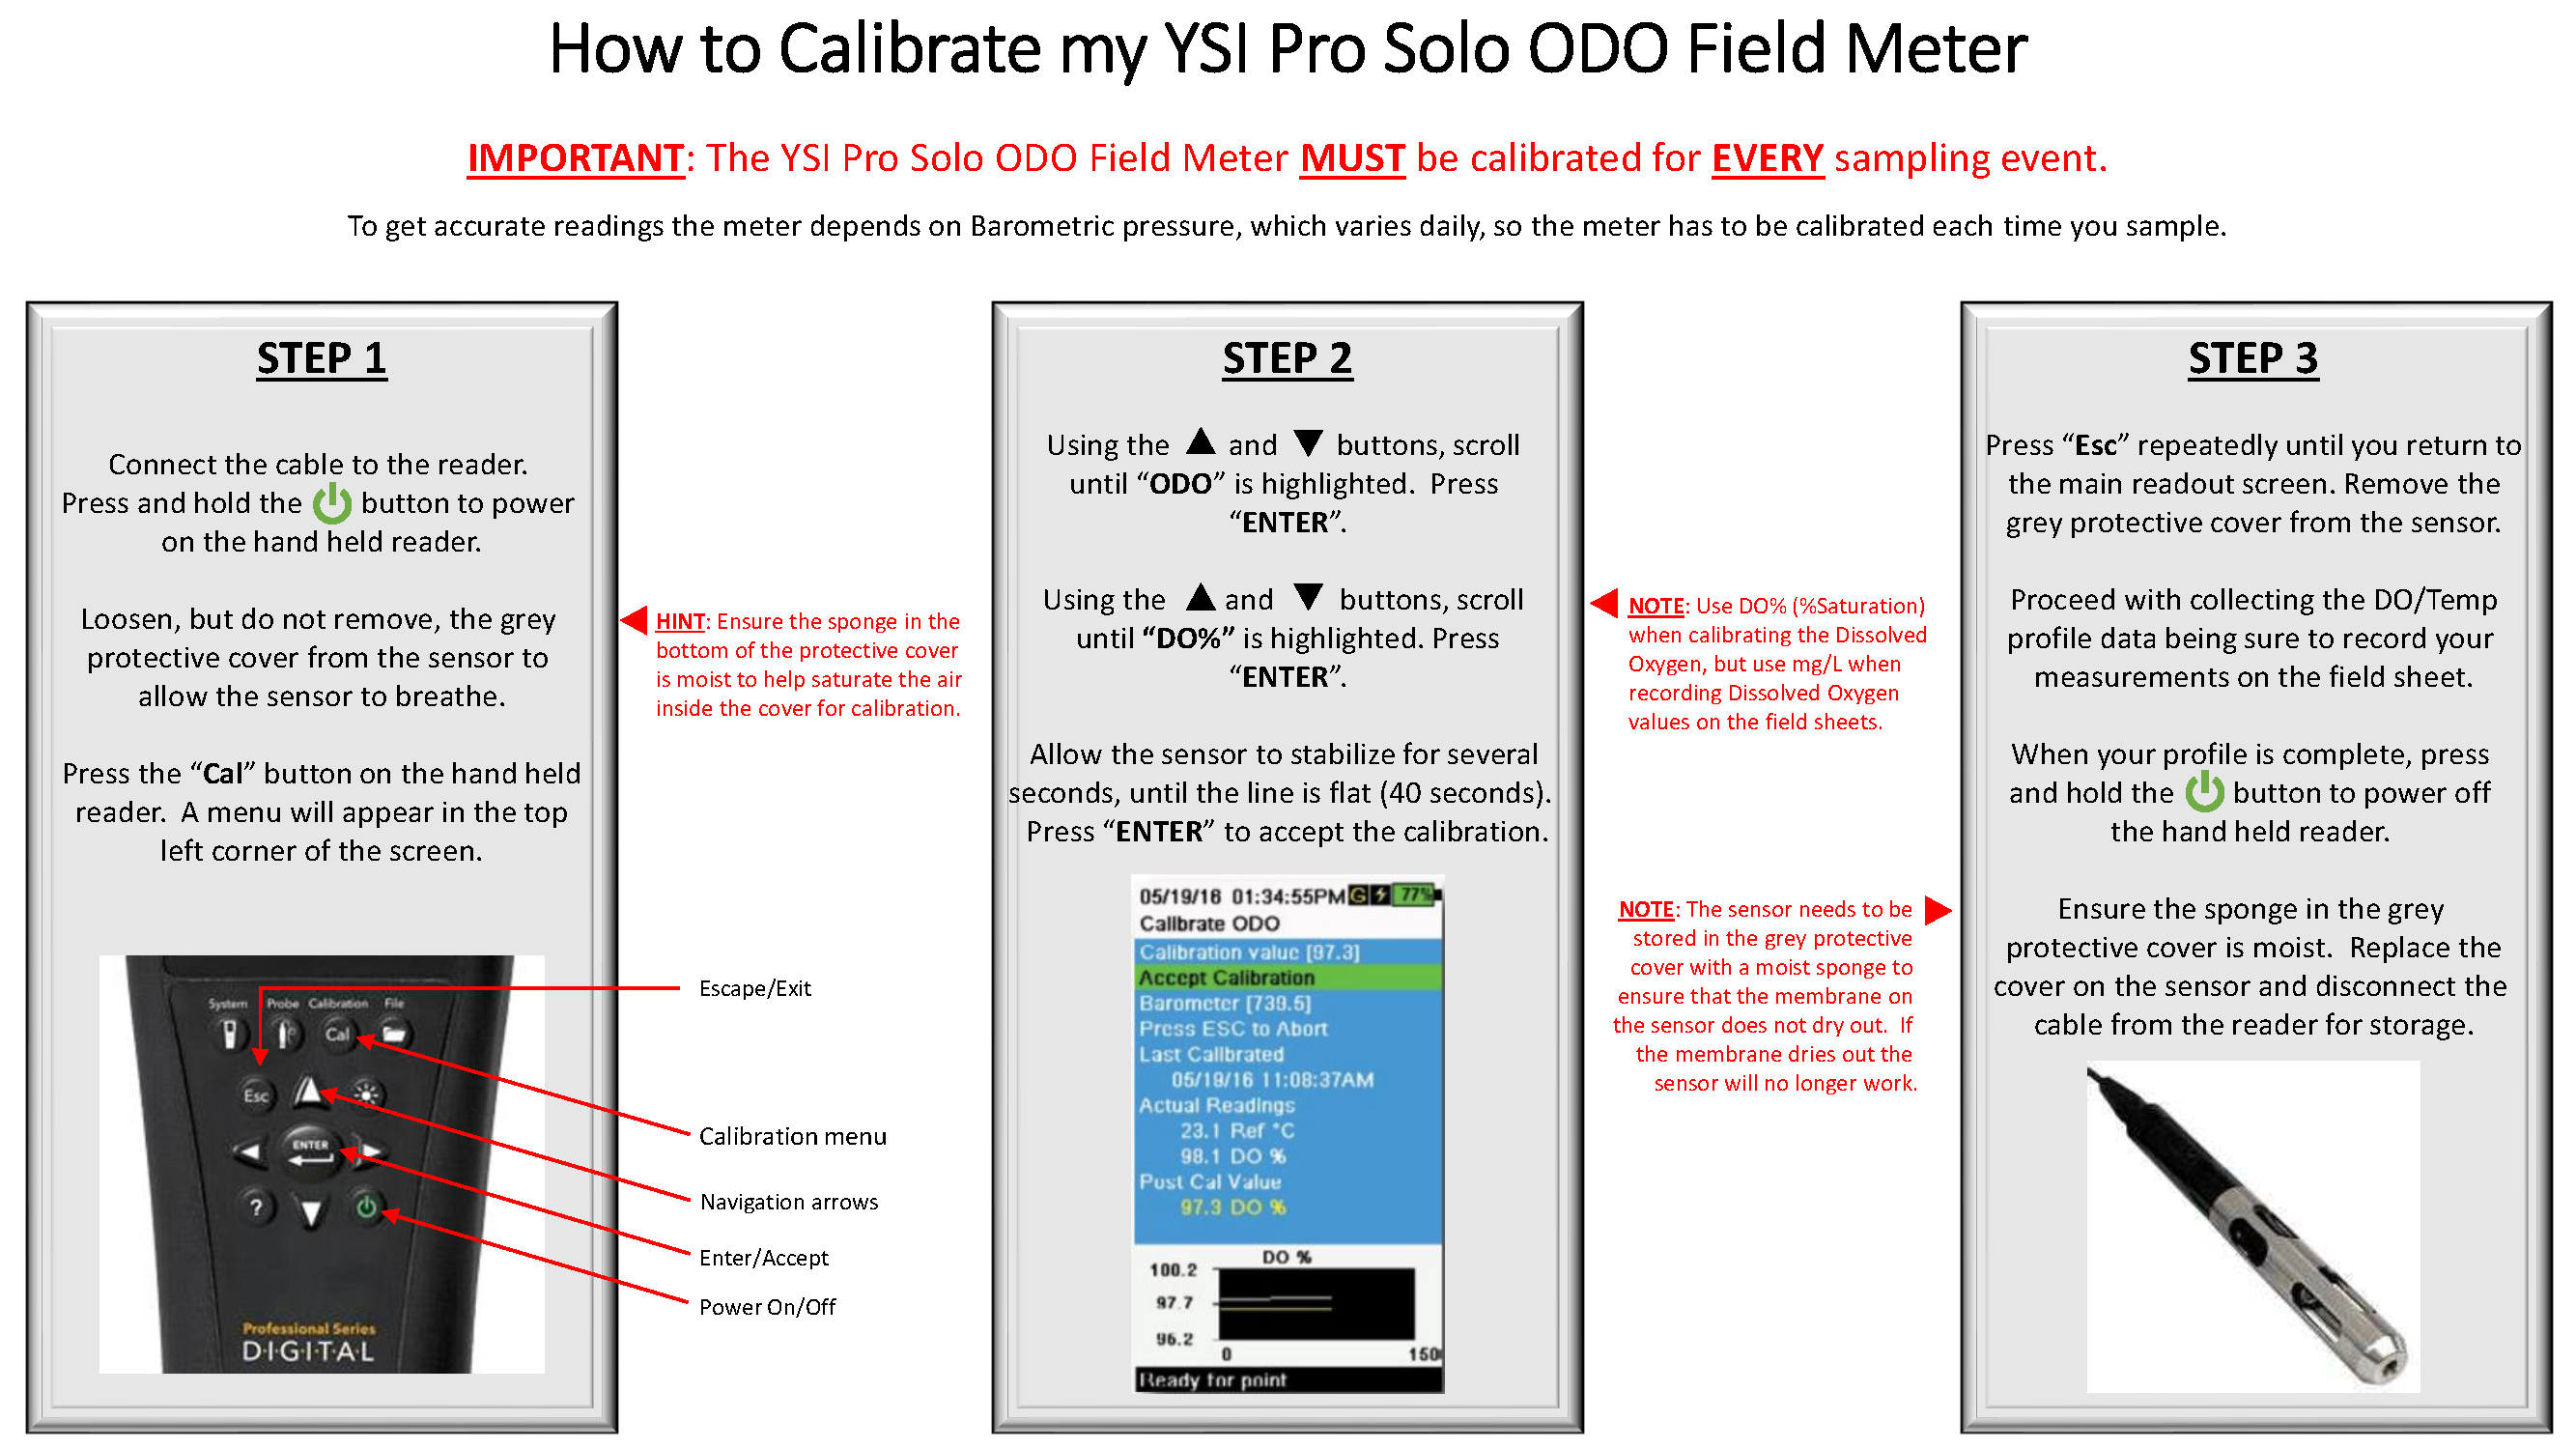 Calibrate your YSI Pro Solo ODO Field Meter guide